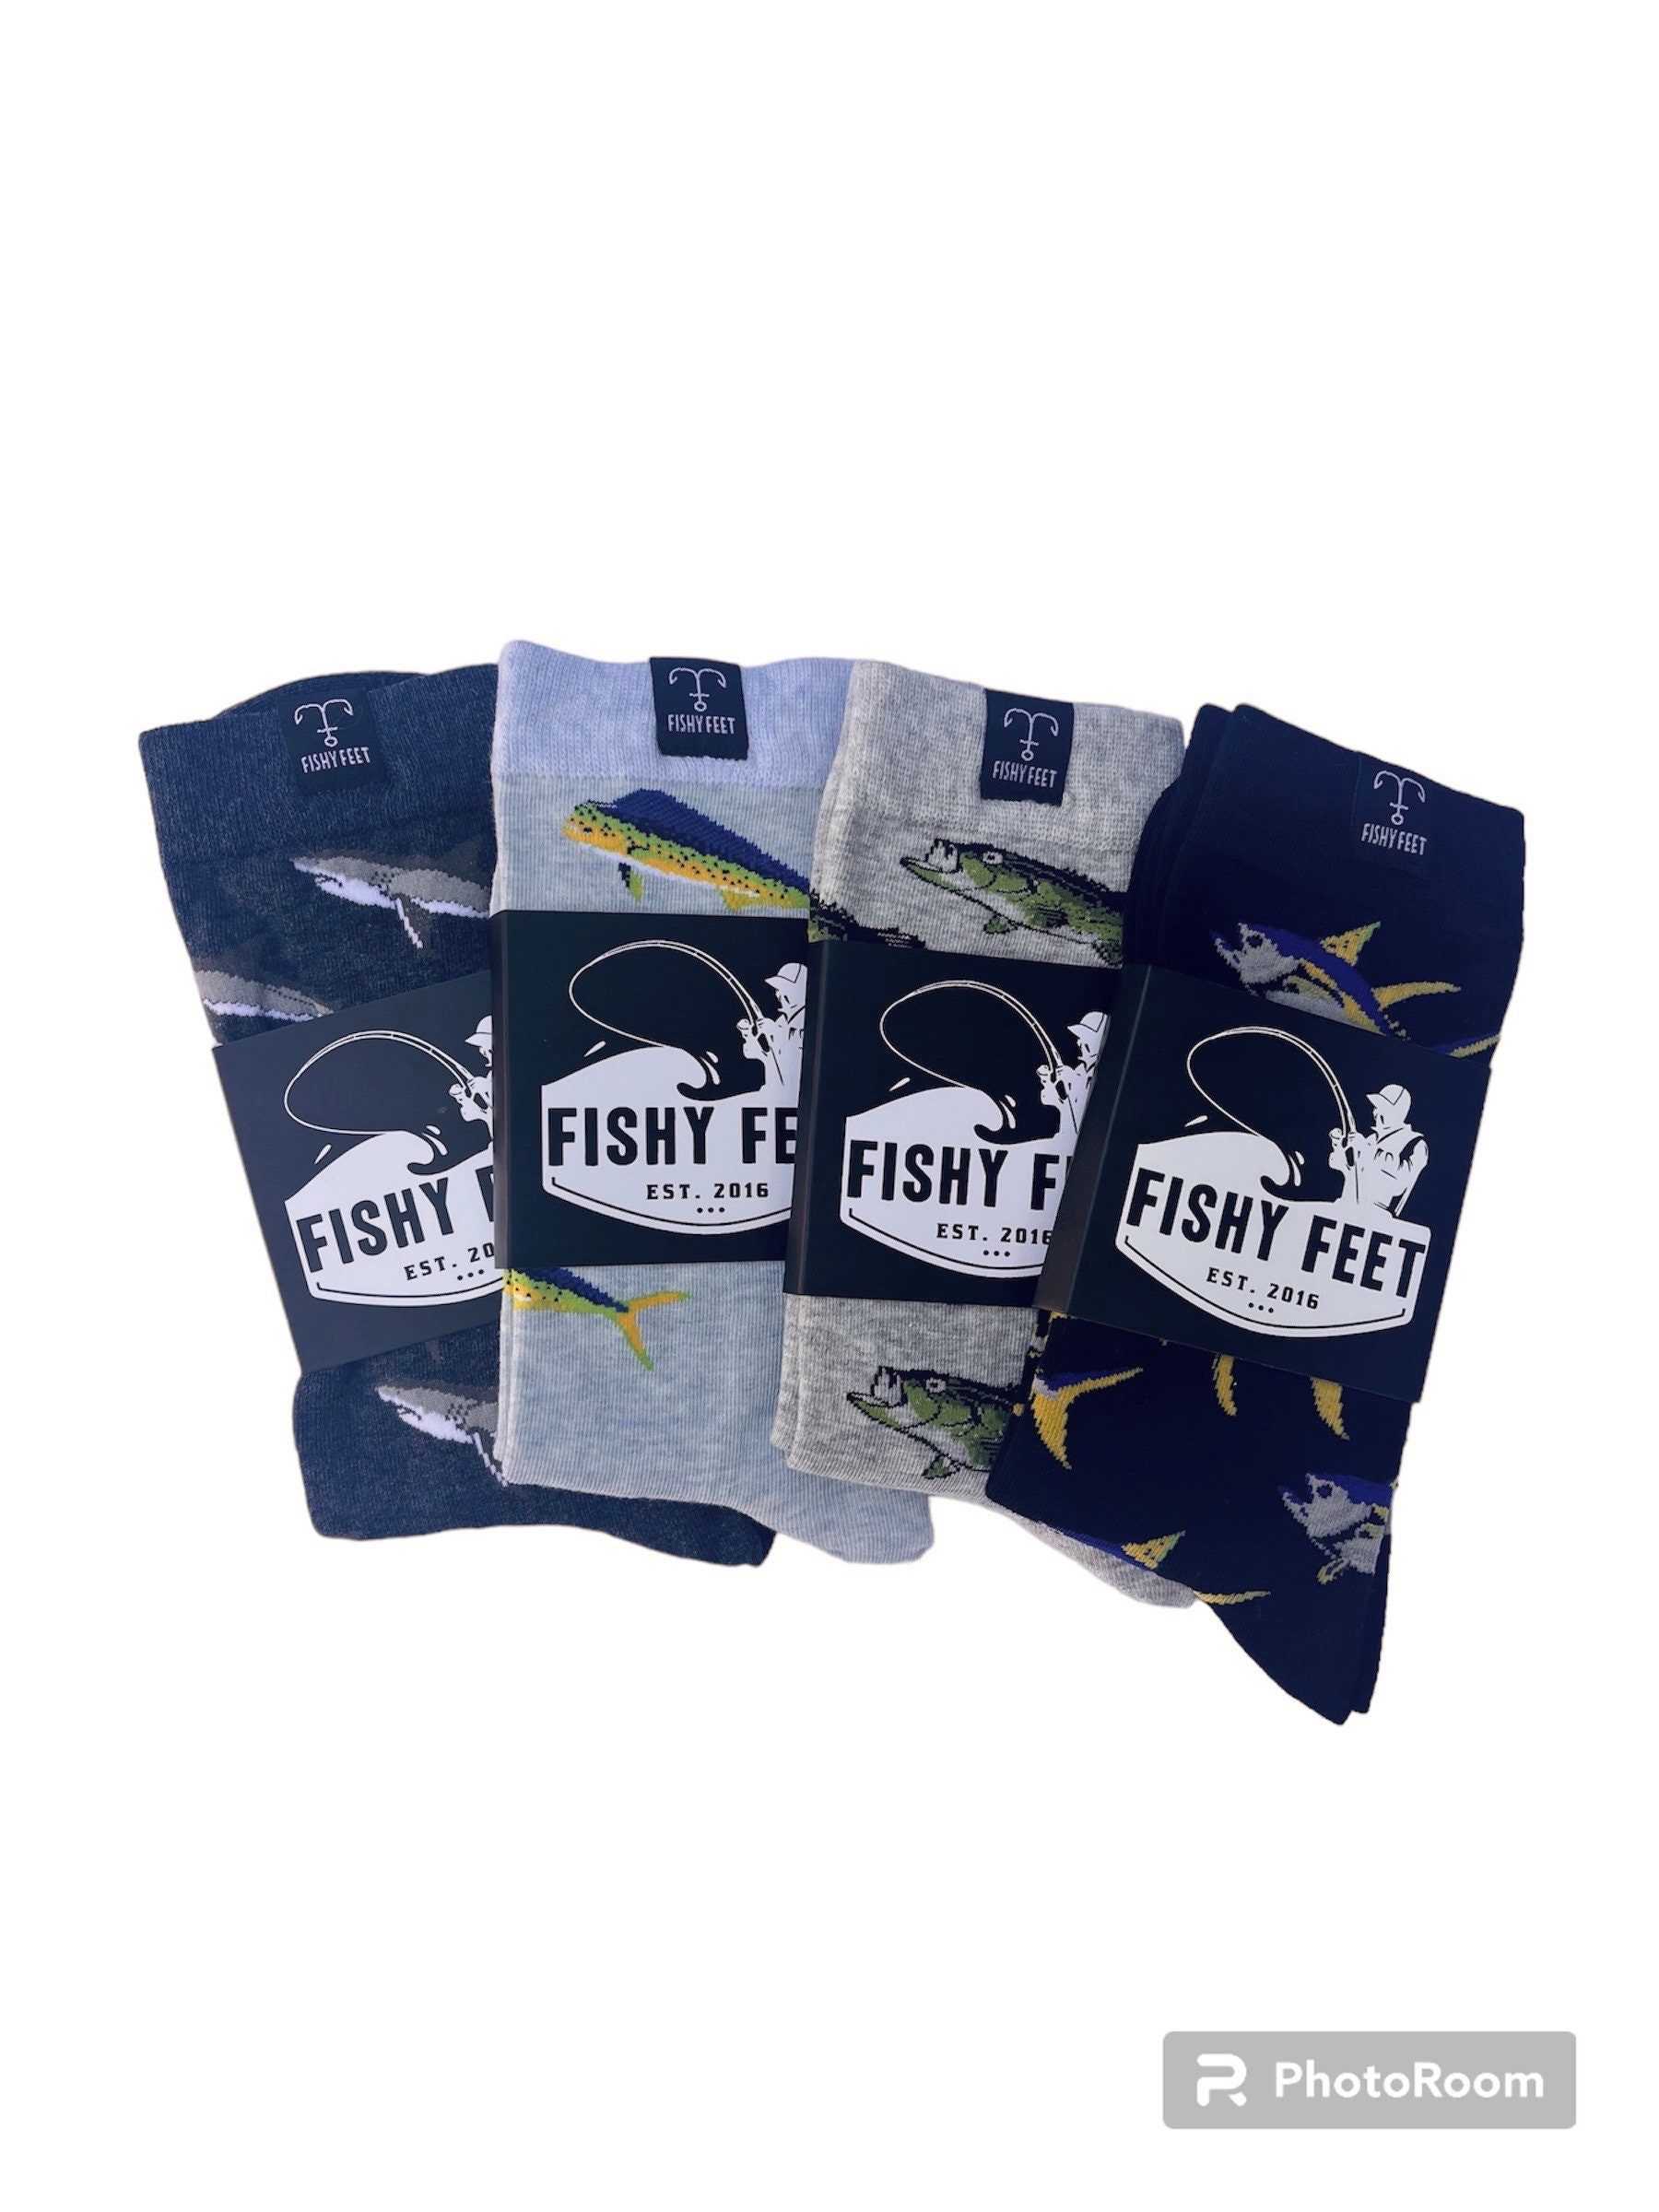 Fish Sock Variety Pack (4 Pairs), Fishing, Fishing Gift, Fisherman, Shark, Bass, Tuna, Fishy Feet, Socks